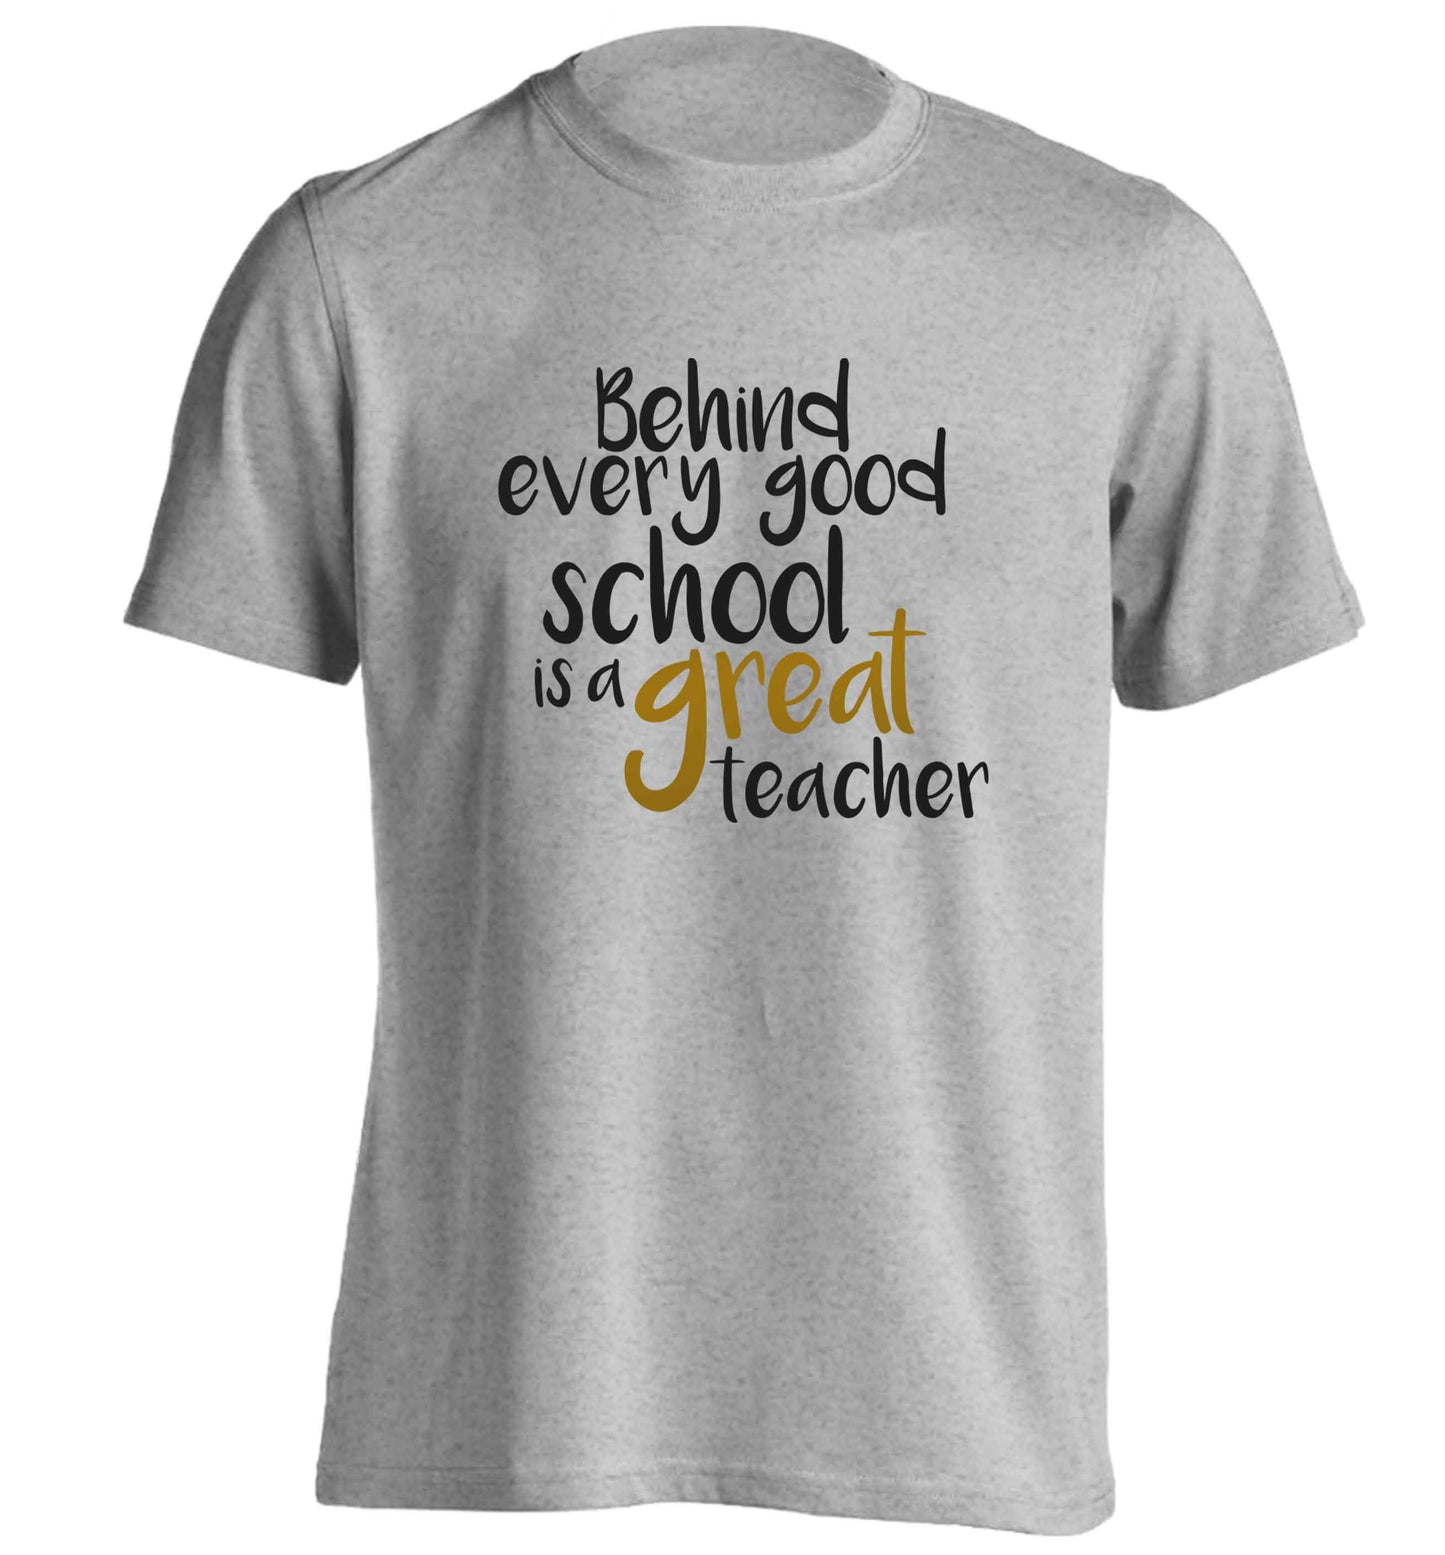 Behind every good school is a great teacher adults unisex grey Tshirt 2XL